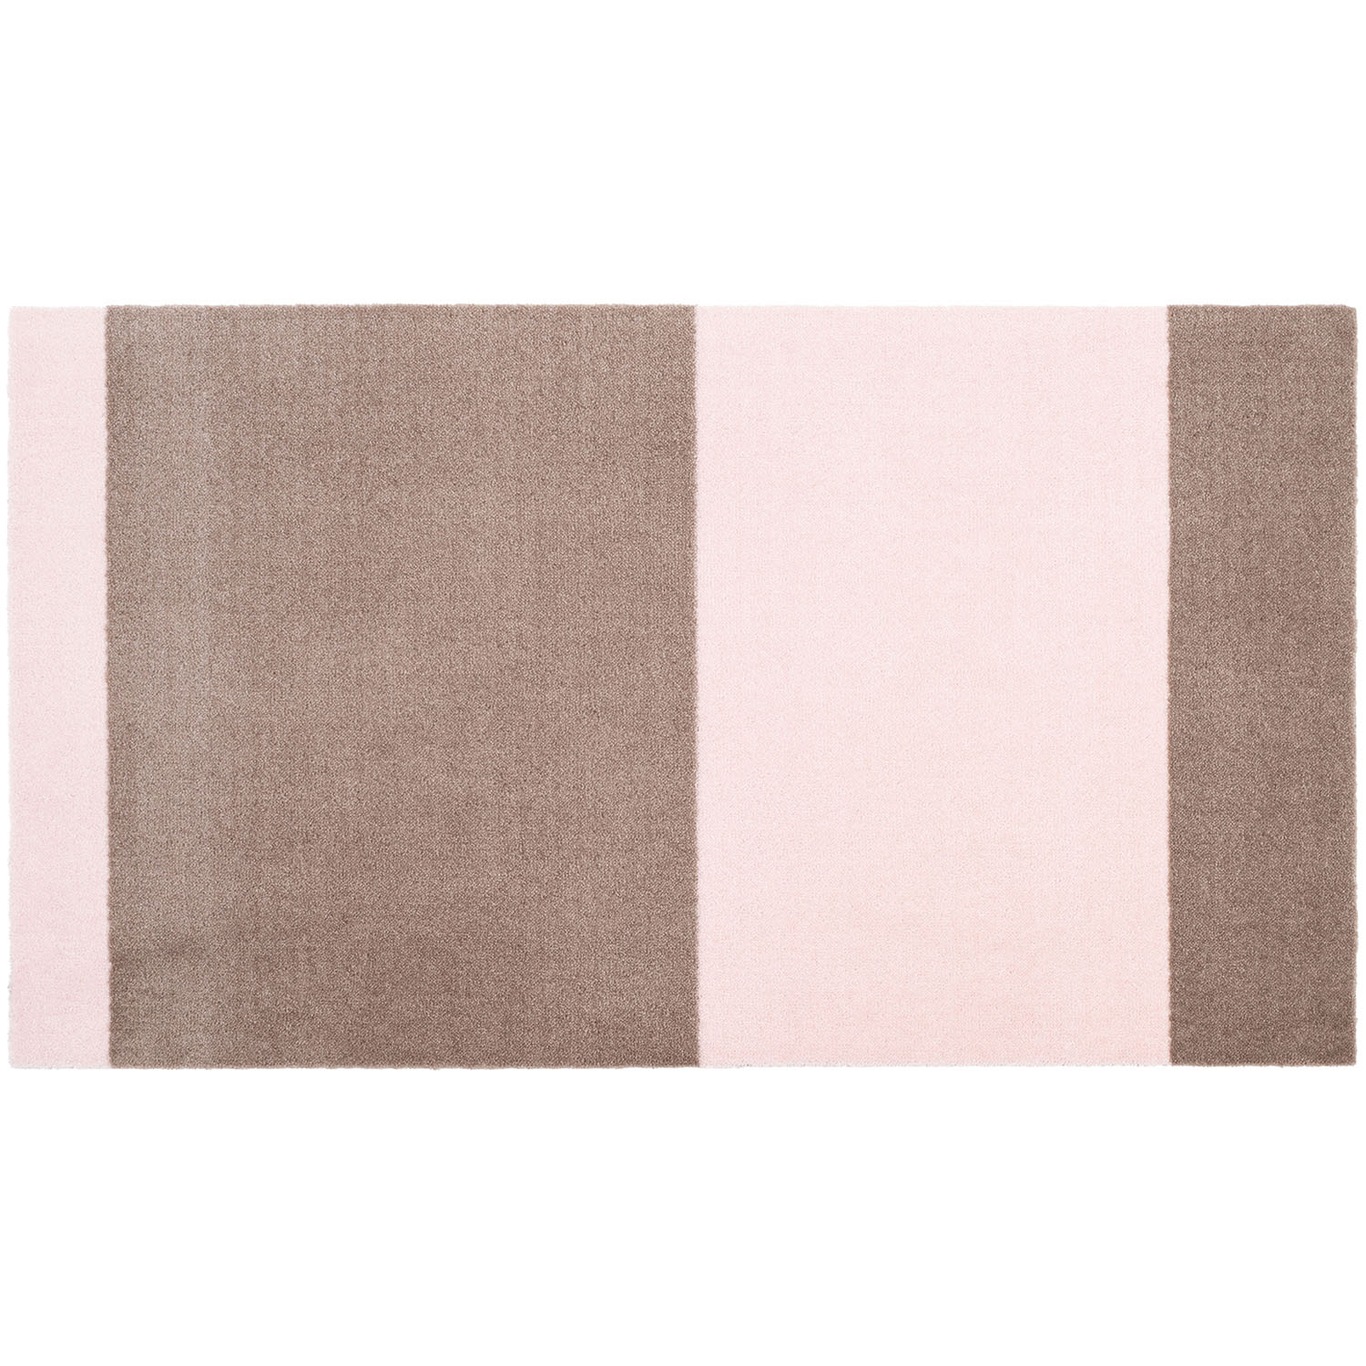 Stripes Matta Sand/Light Rose, 67x120 cm